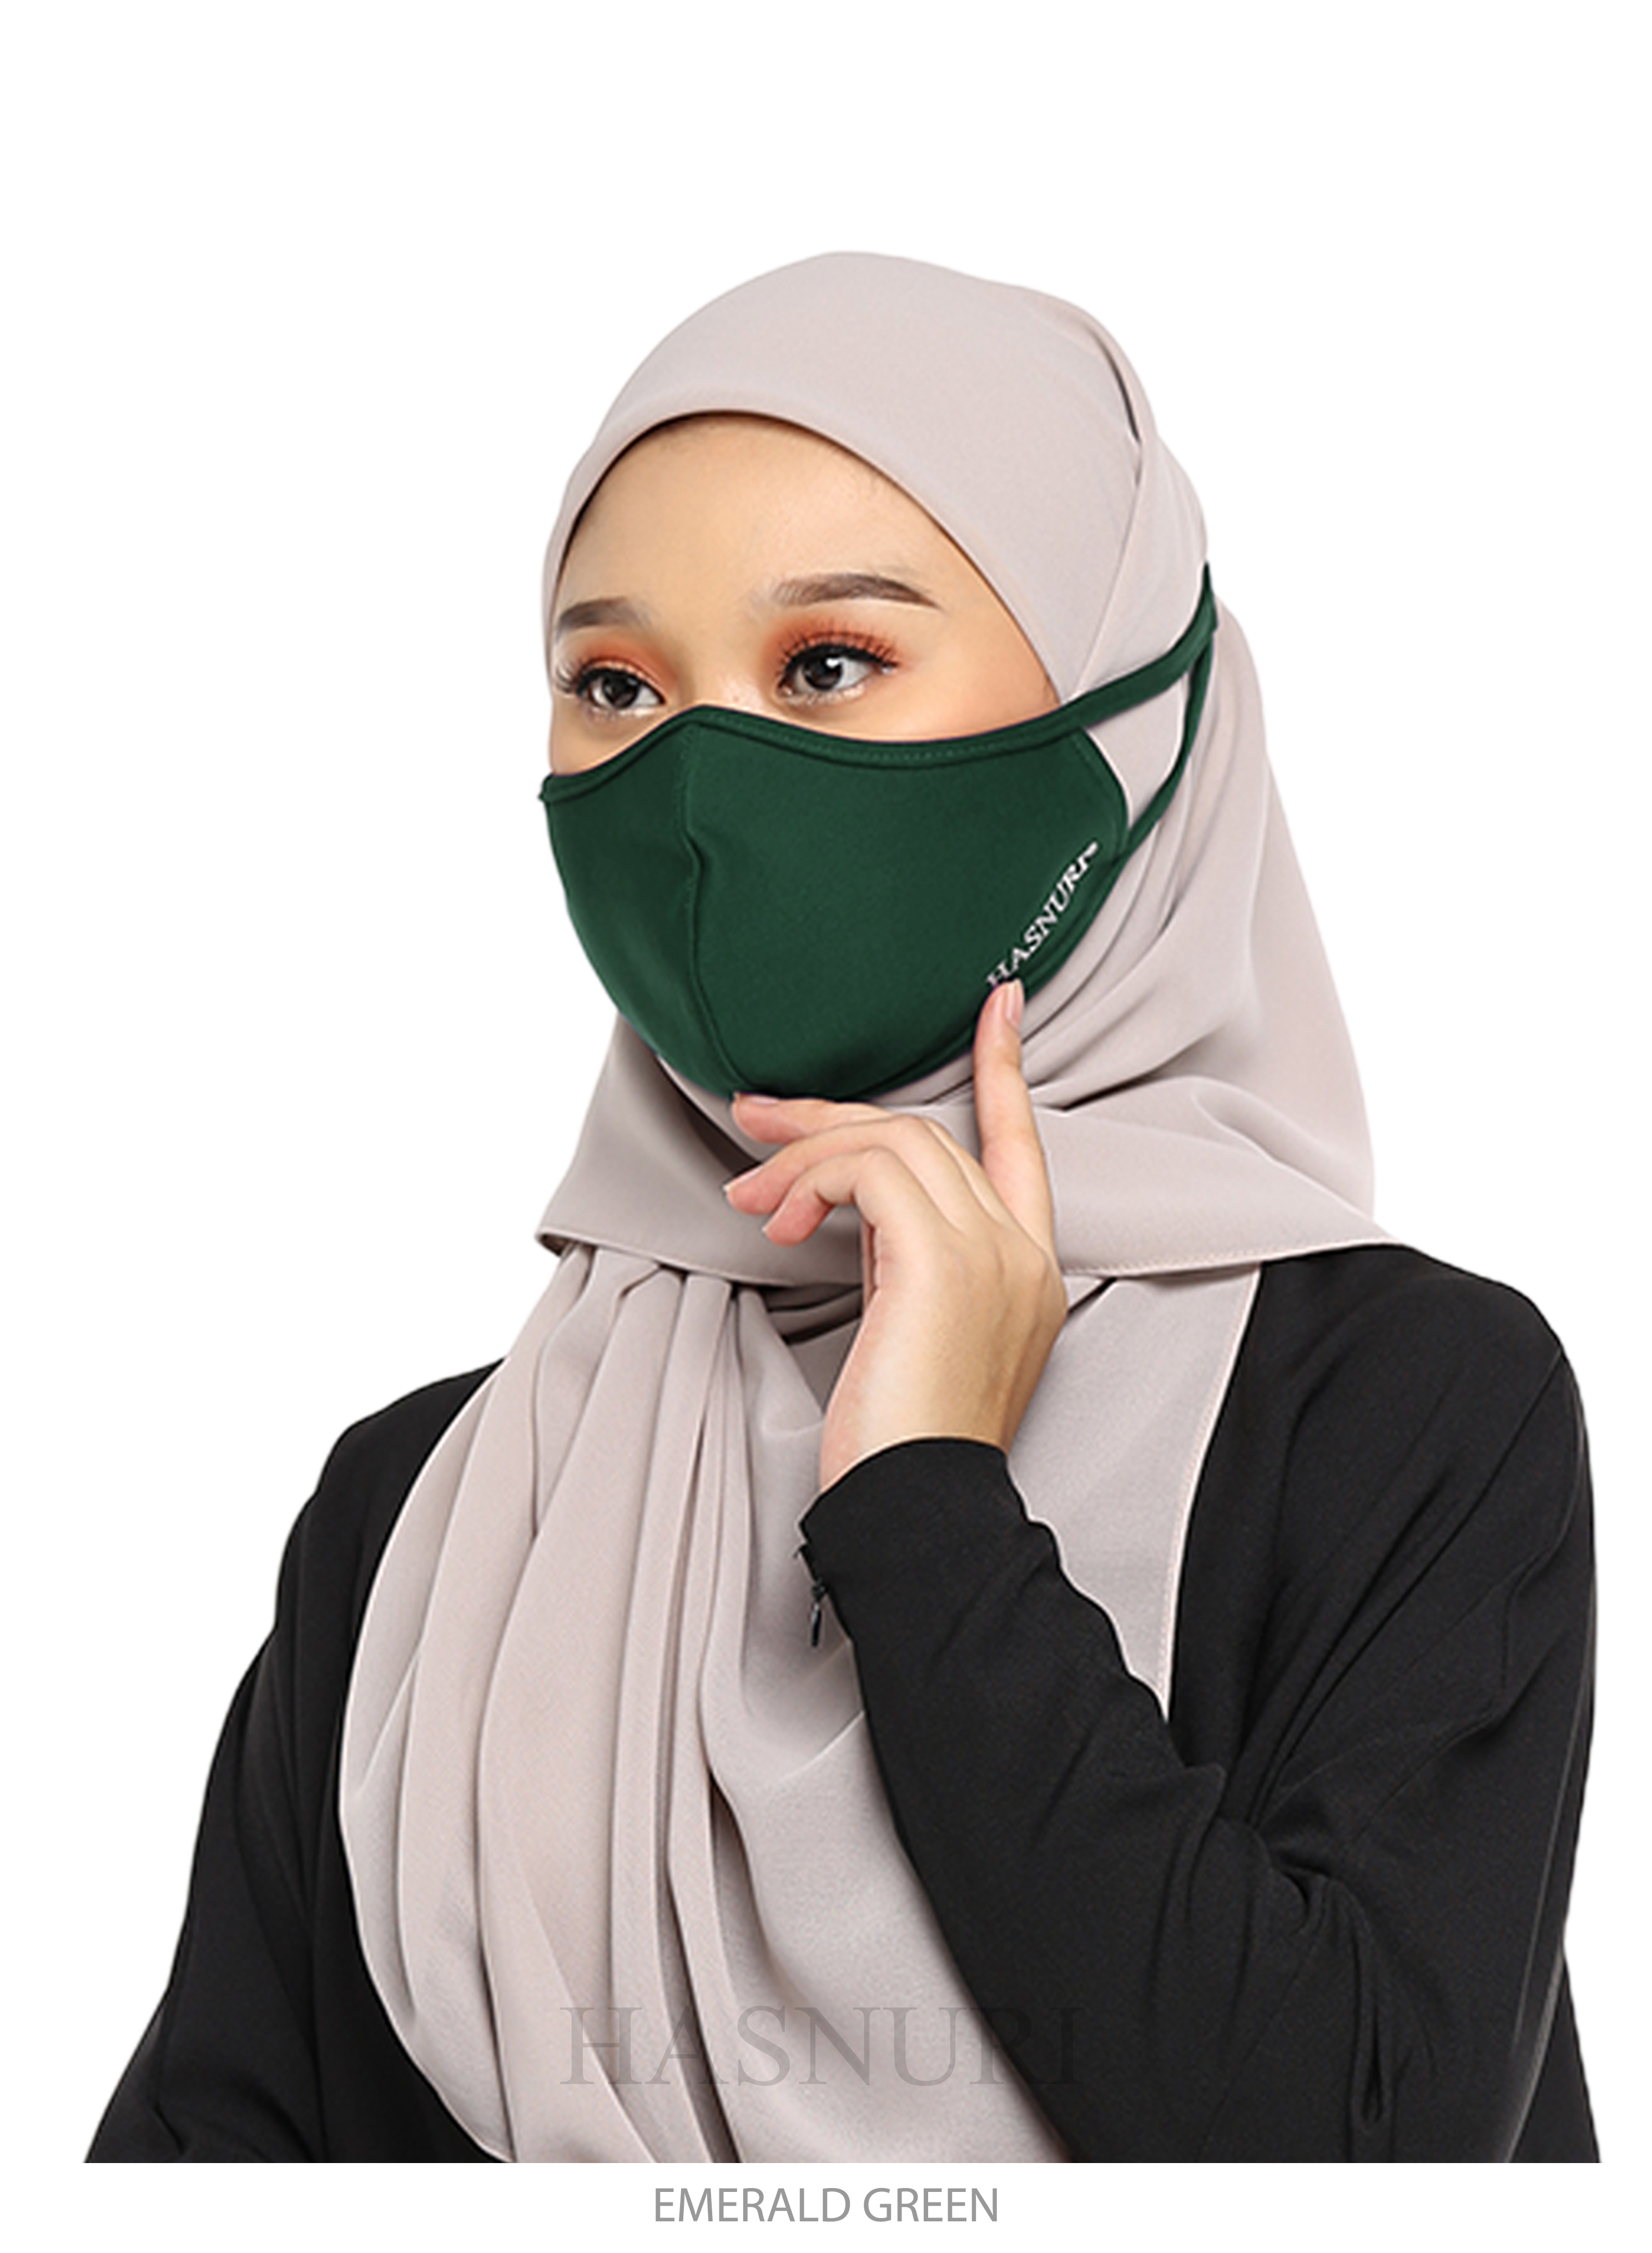 Face Mask Hasnuri - Emerald Green&w=300&zc=1